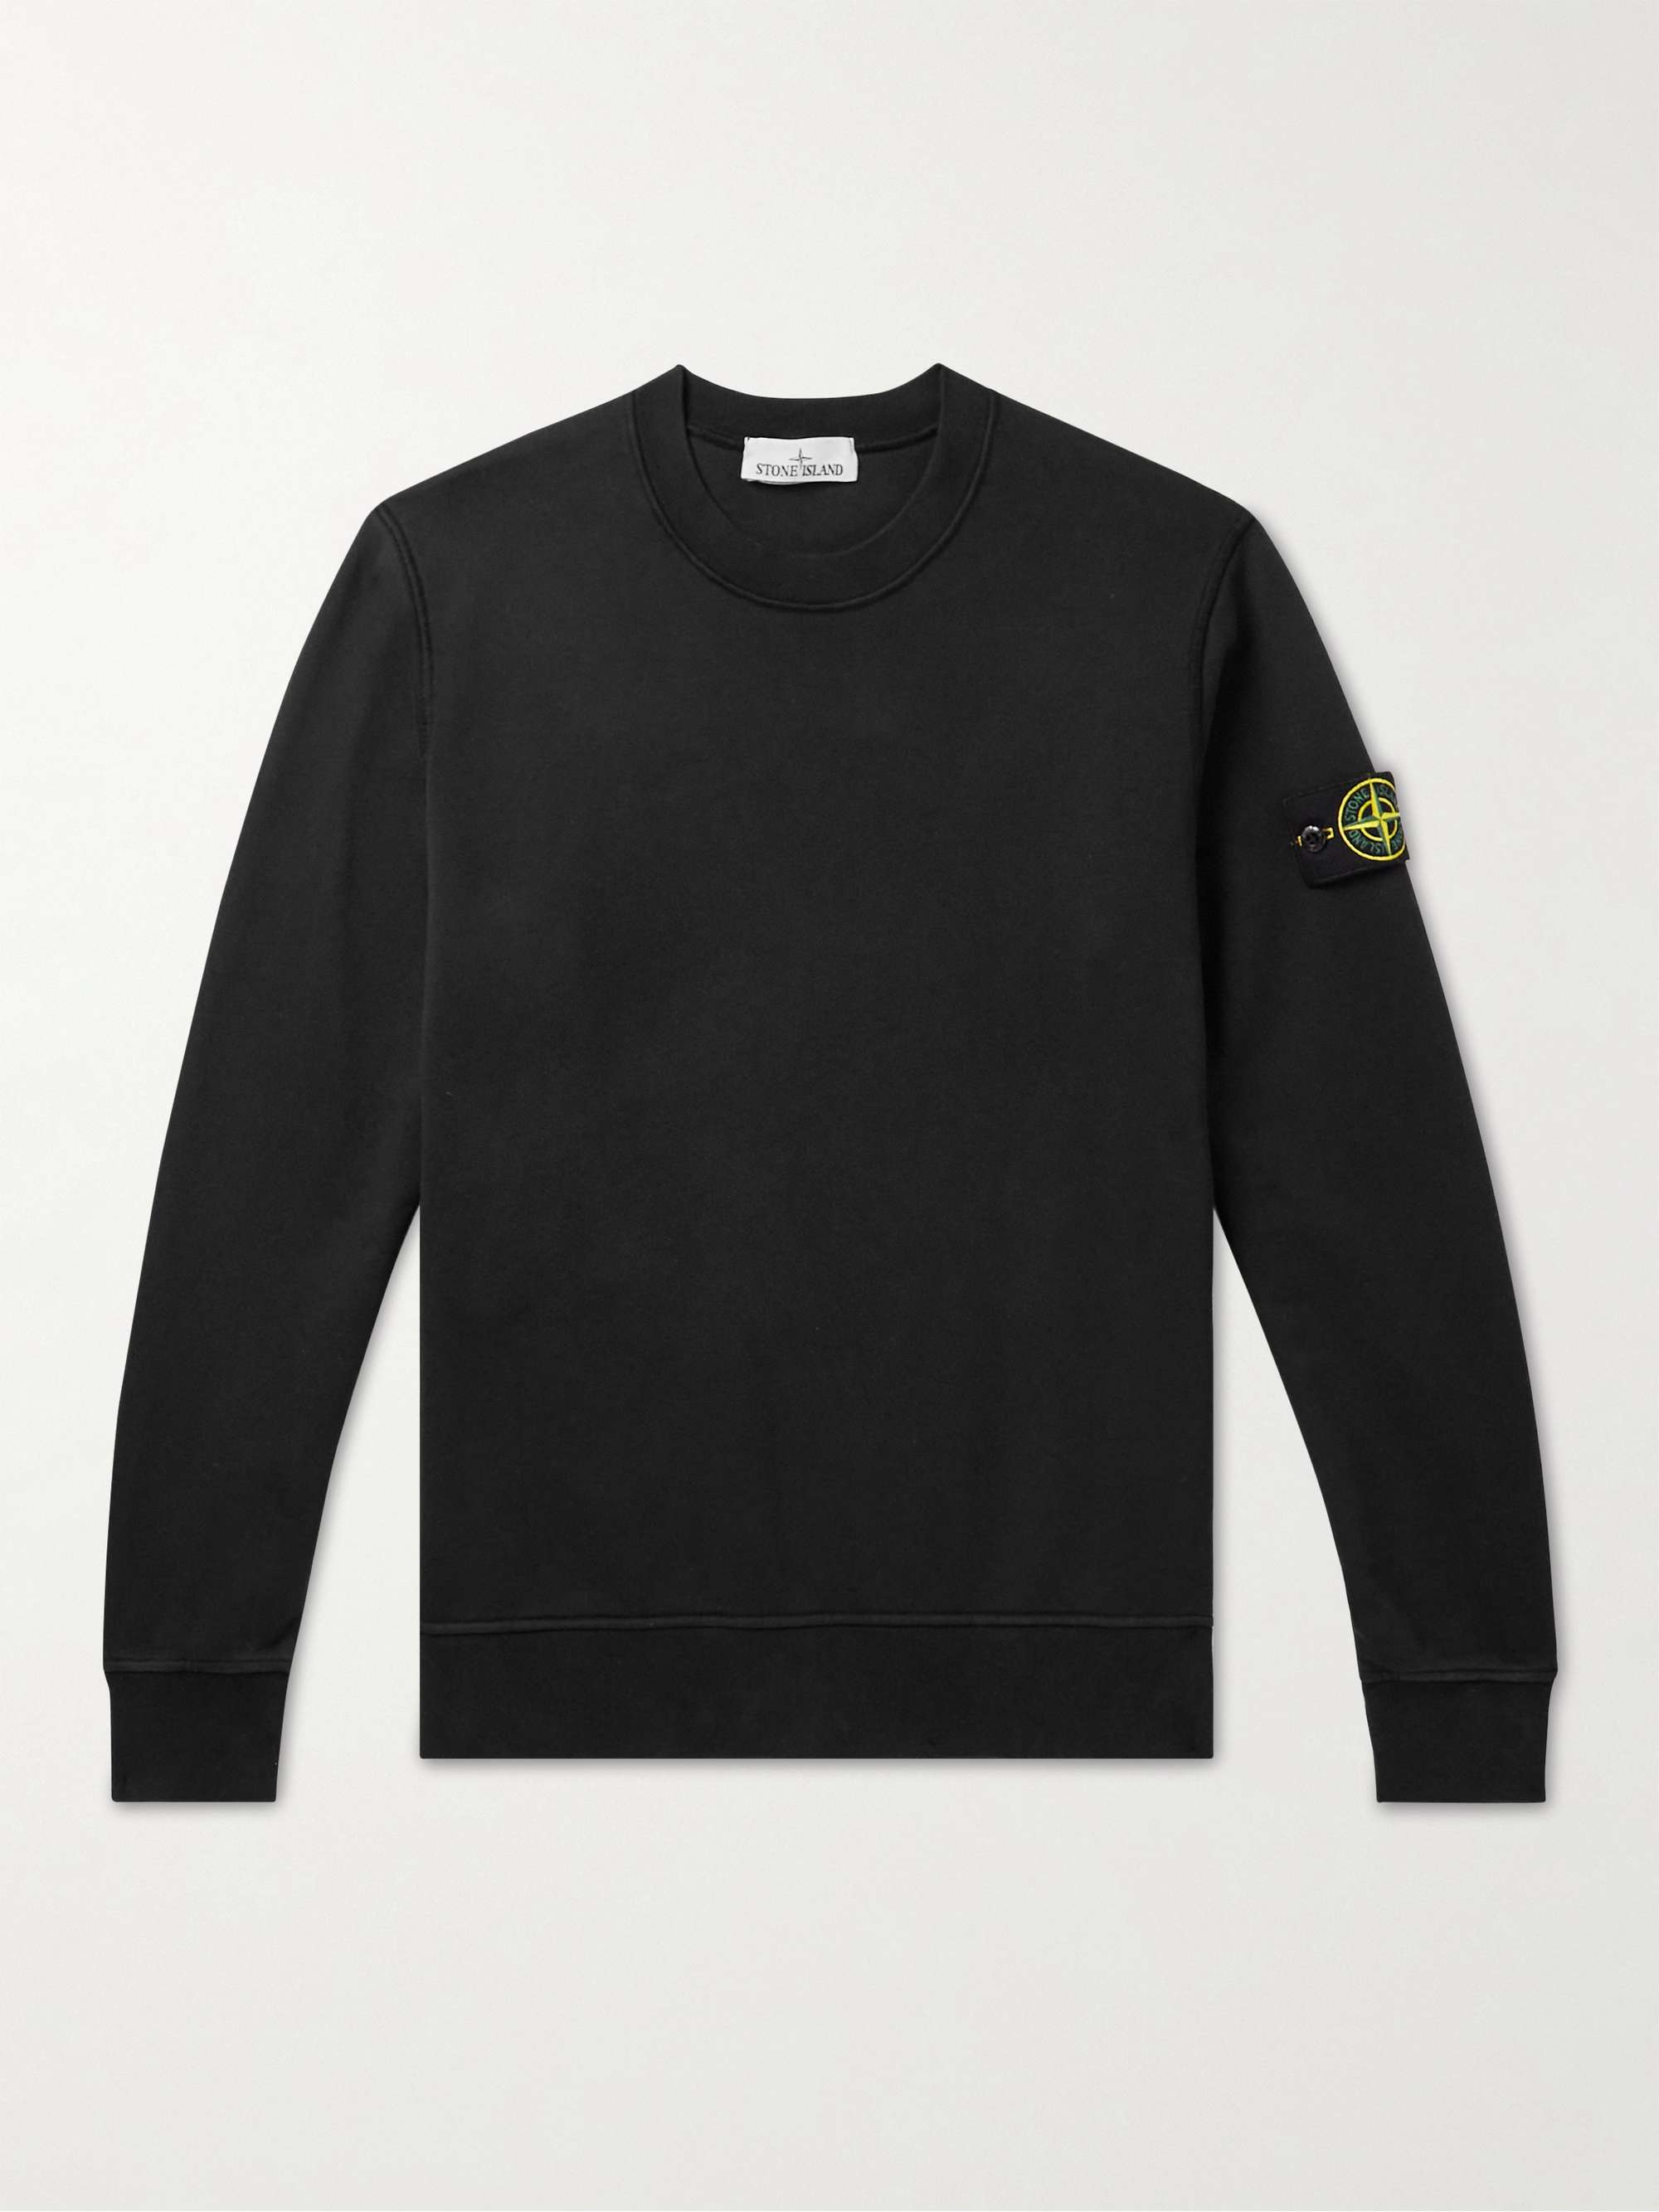 STONE ISLAND Logo-Appliqued Garment-Dyed Cotton-Jersey Sweatshirt,Black